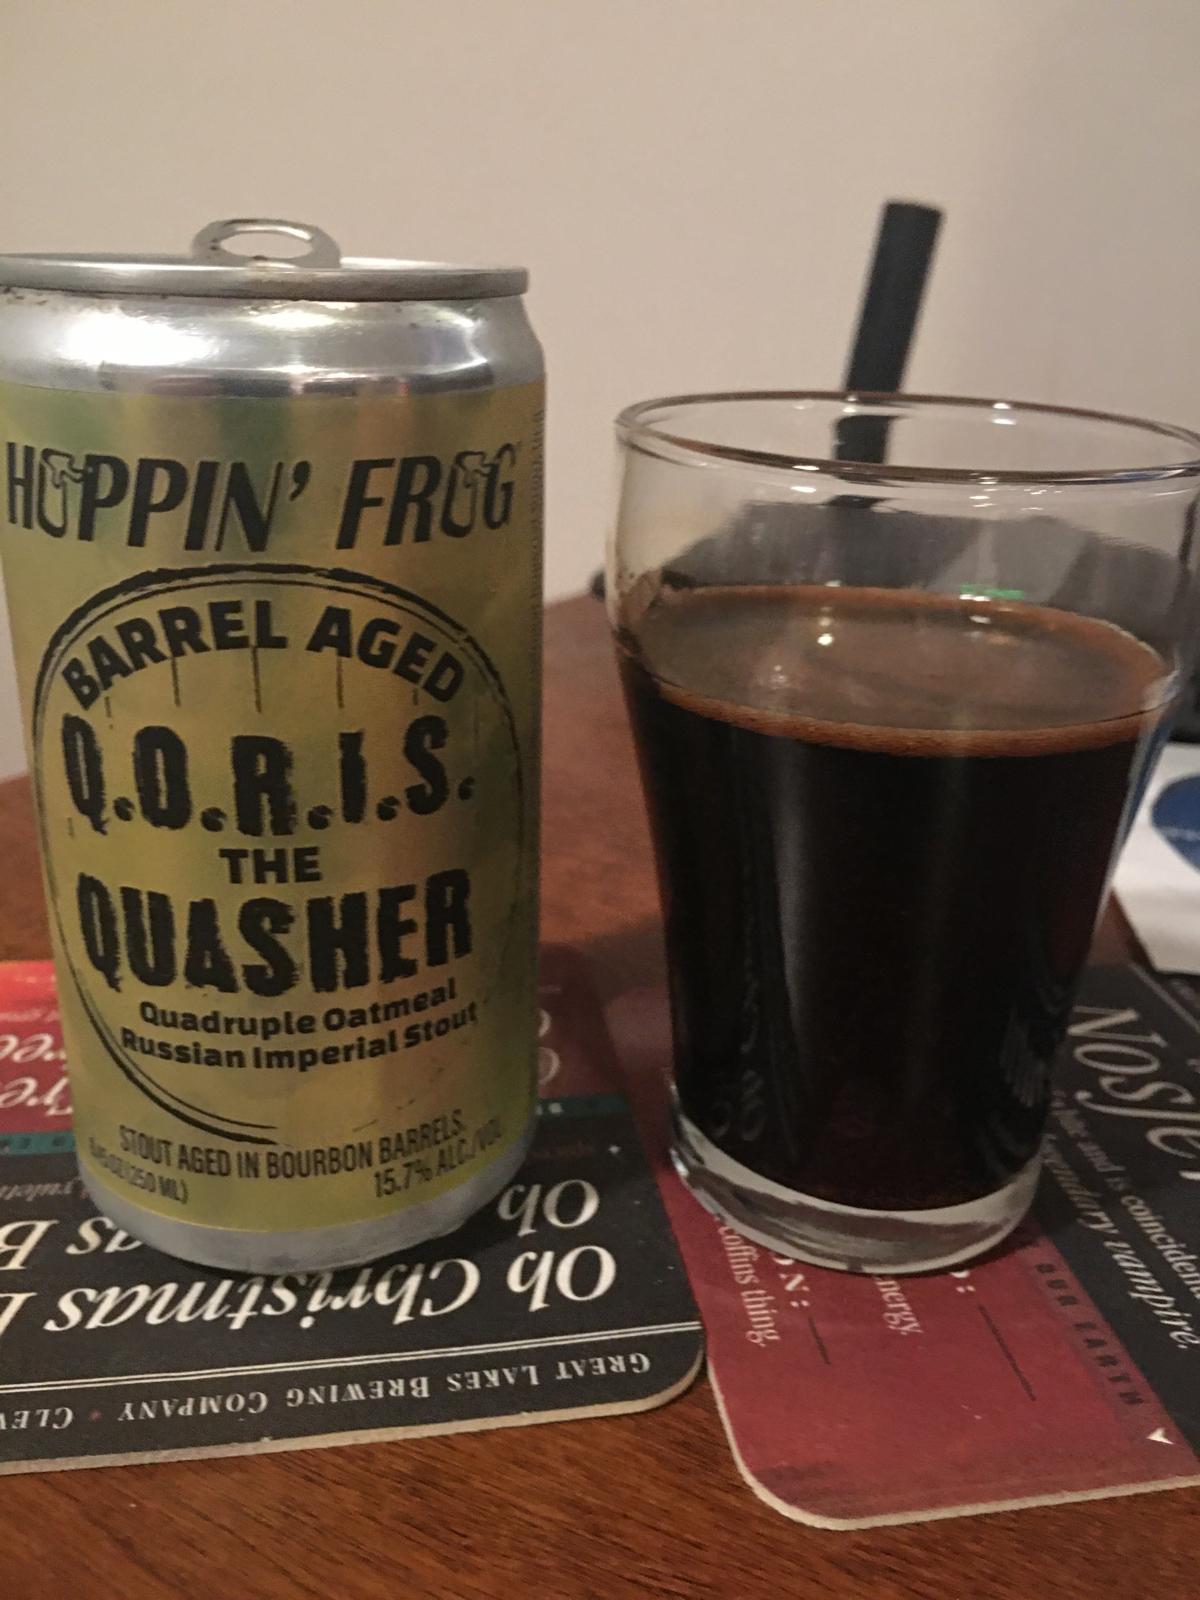 Q.O.R.I.S. The Quasher (Barrel Aged)